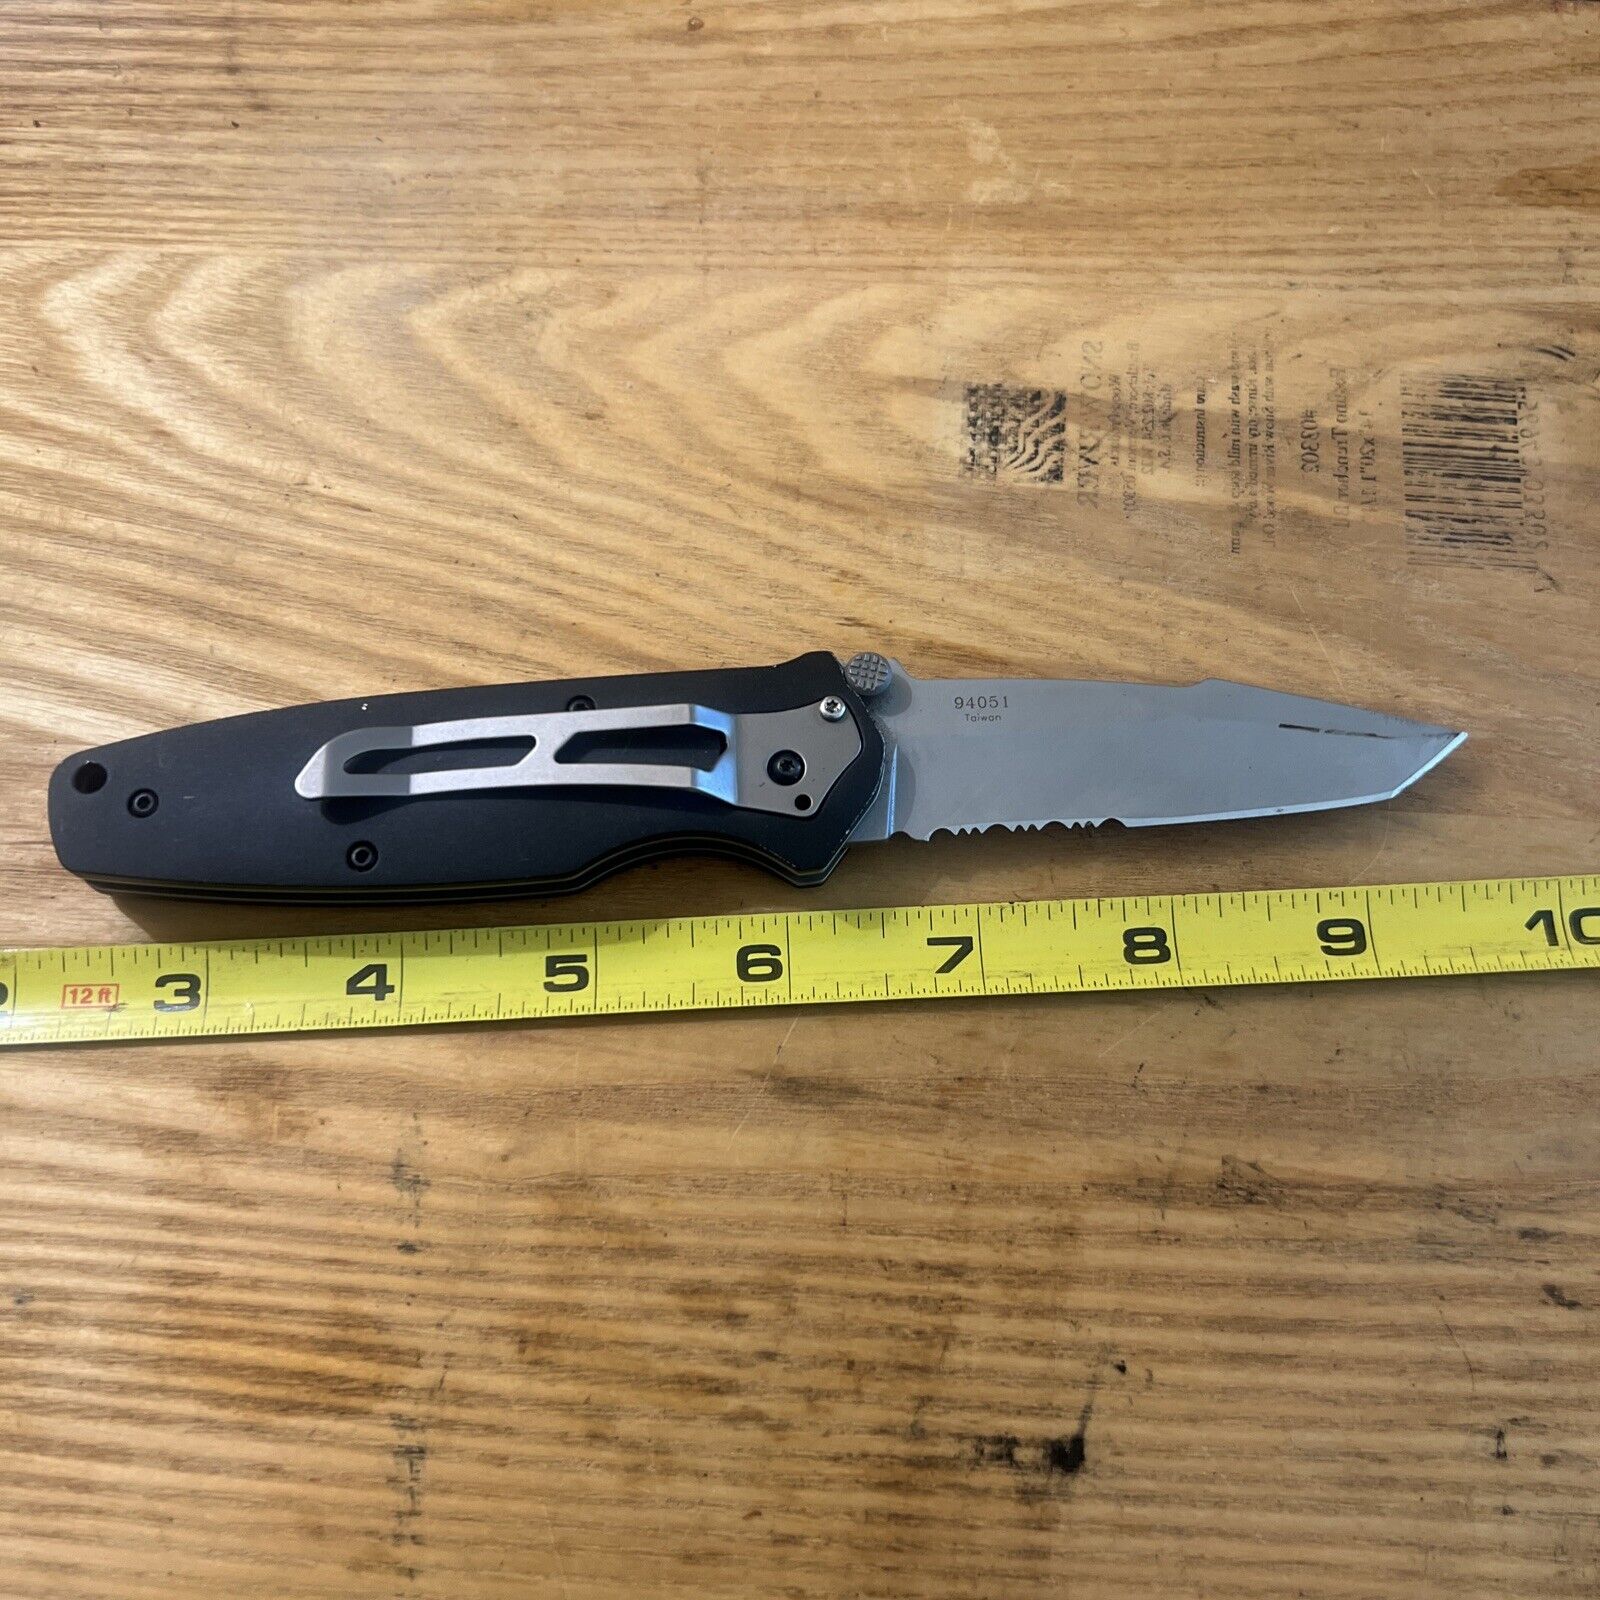 TIMBERLINE TACTICAL FOLDER KNIFE KNIVE 94051